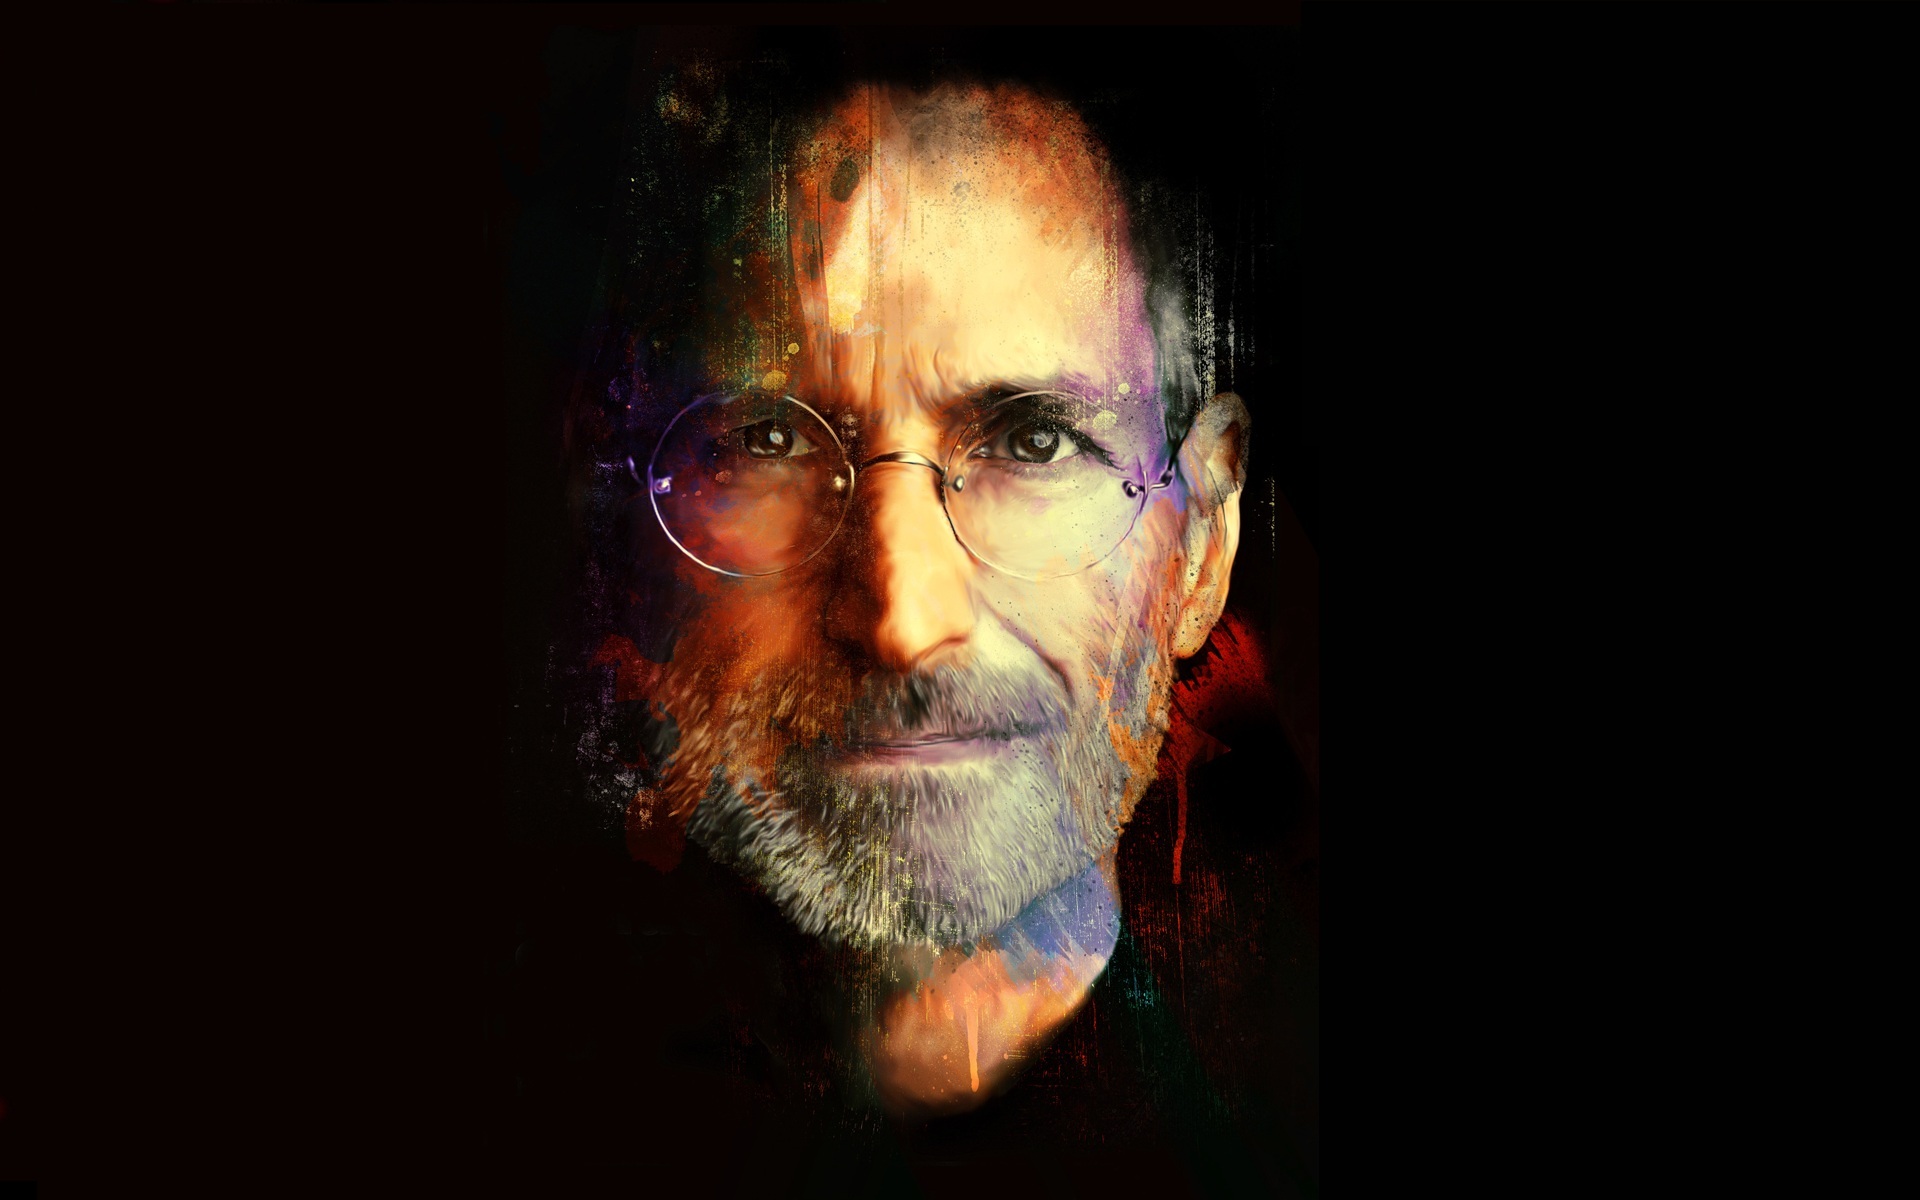 Steve Jobs из линейки apple без смс